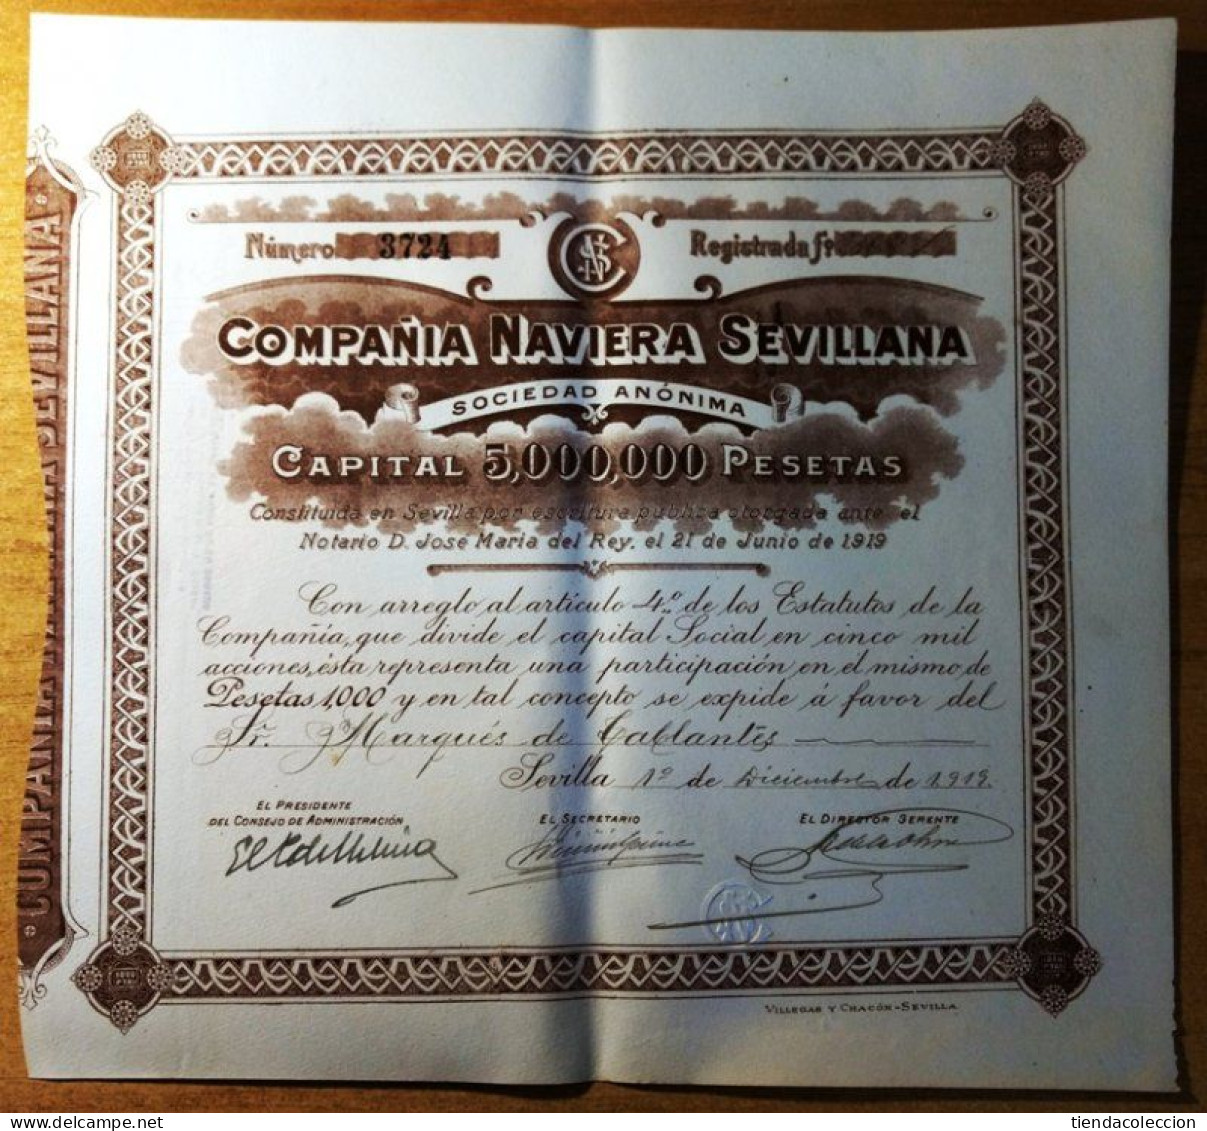 Compañía Naviera Sevillana - Navigation